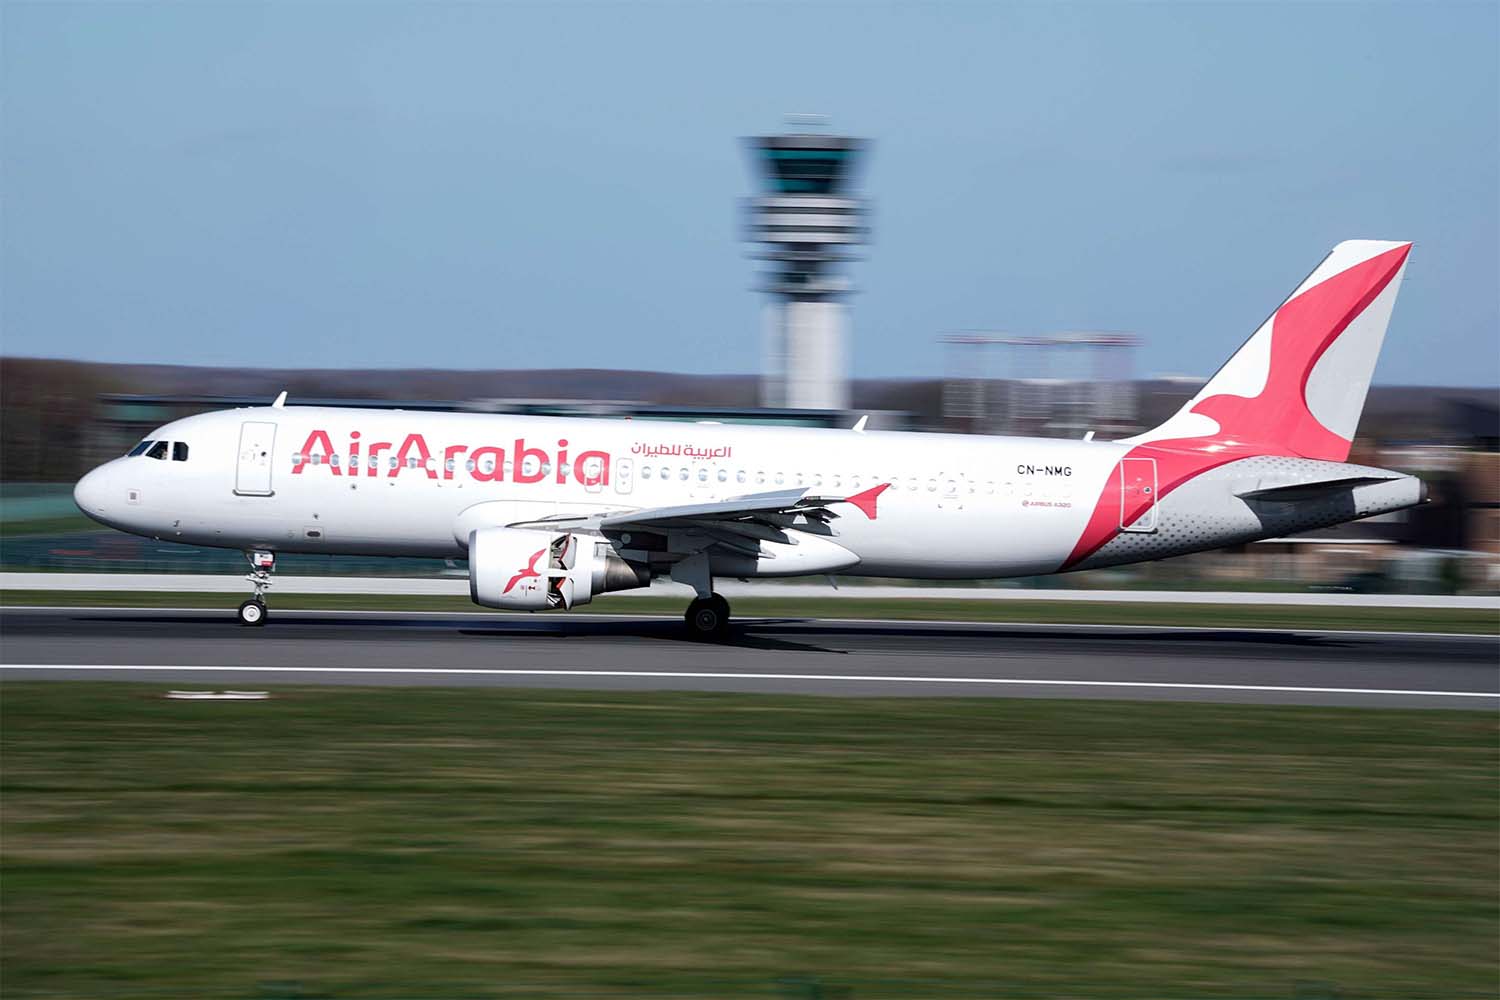 AirArabia aircraft lands at Brussels Airport